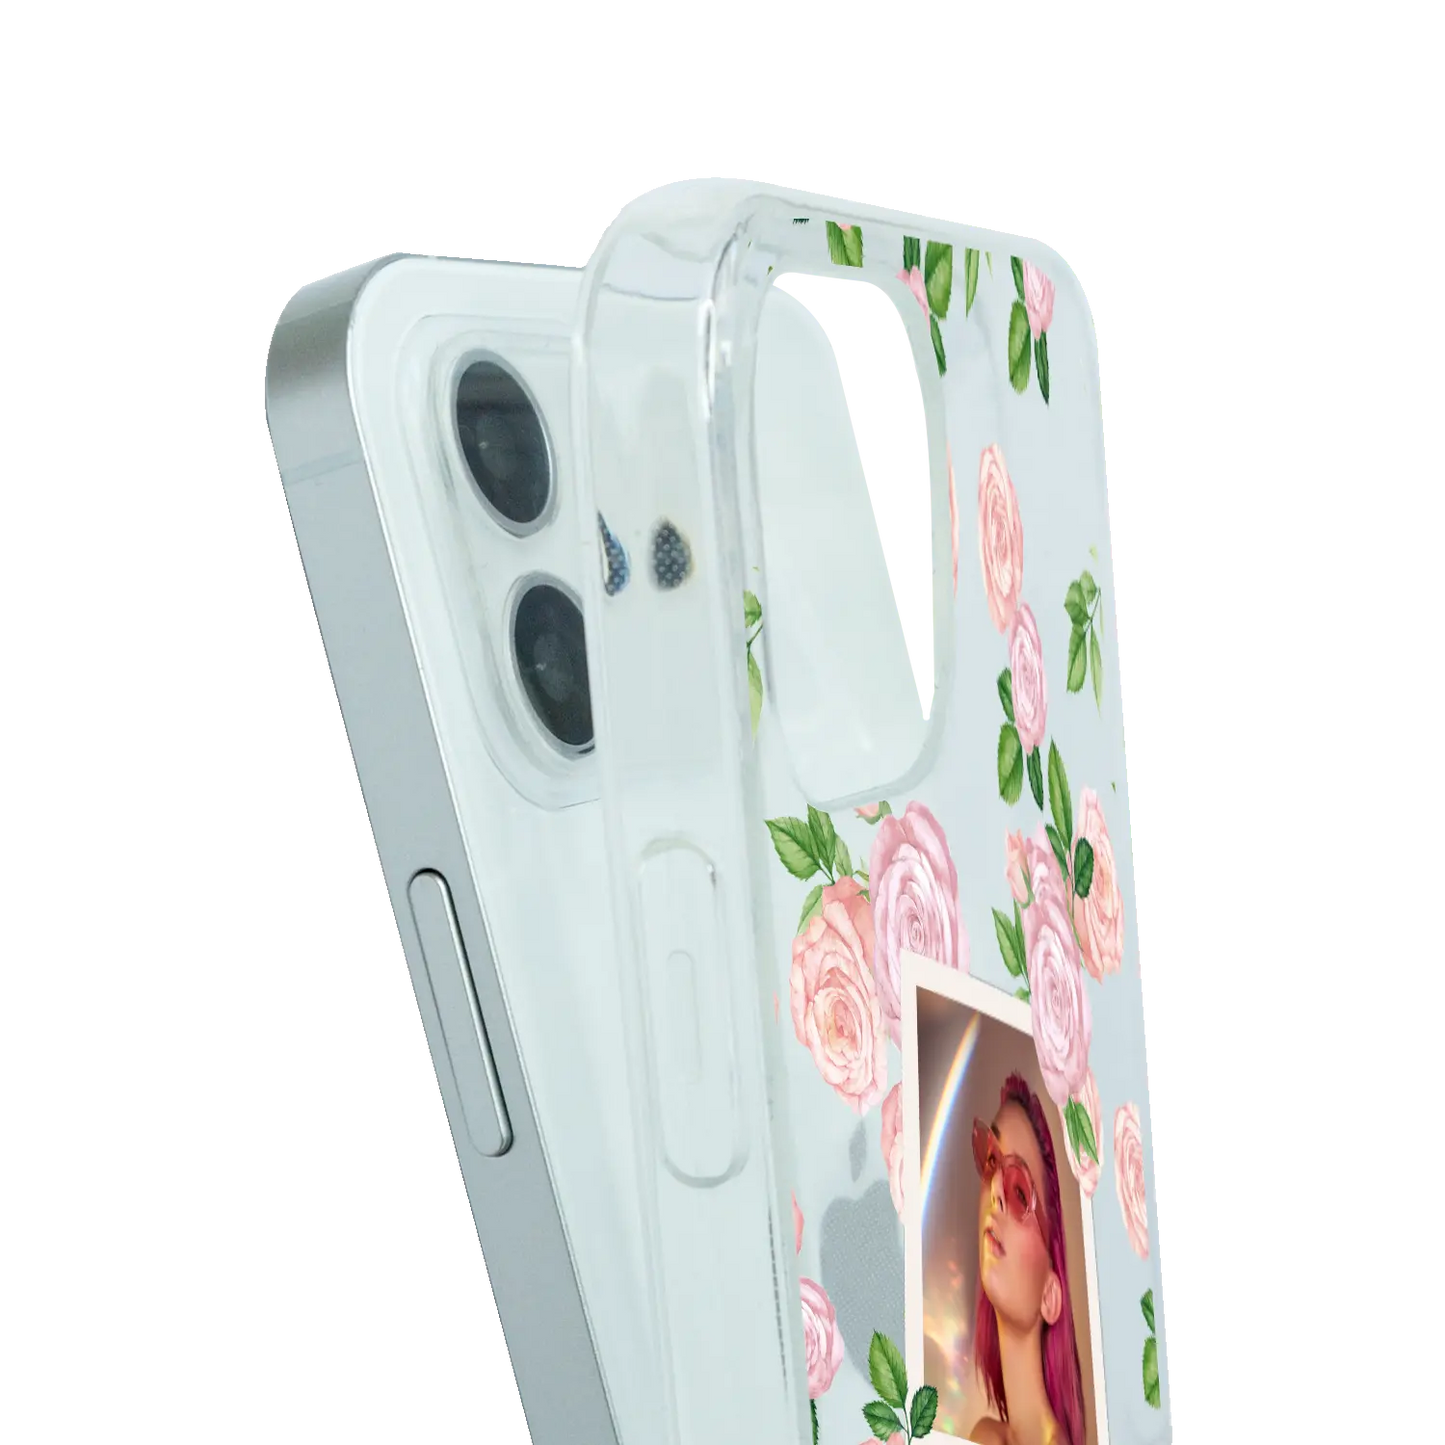 Roses - Custom Galaxy S Case